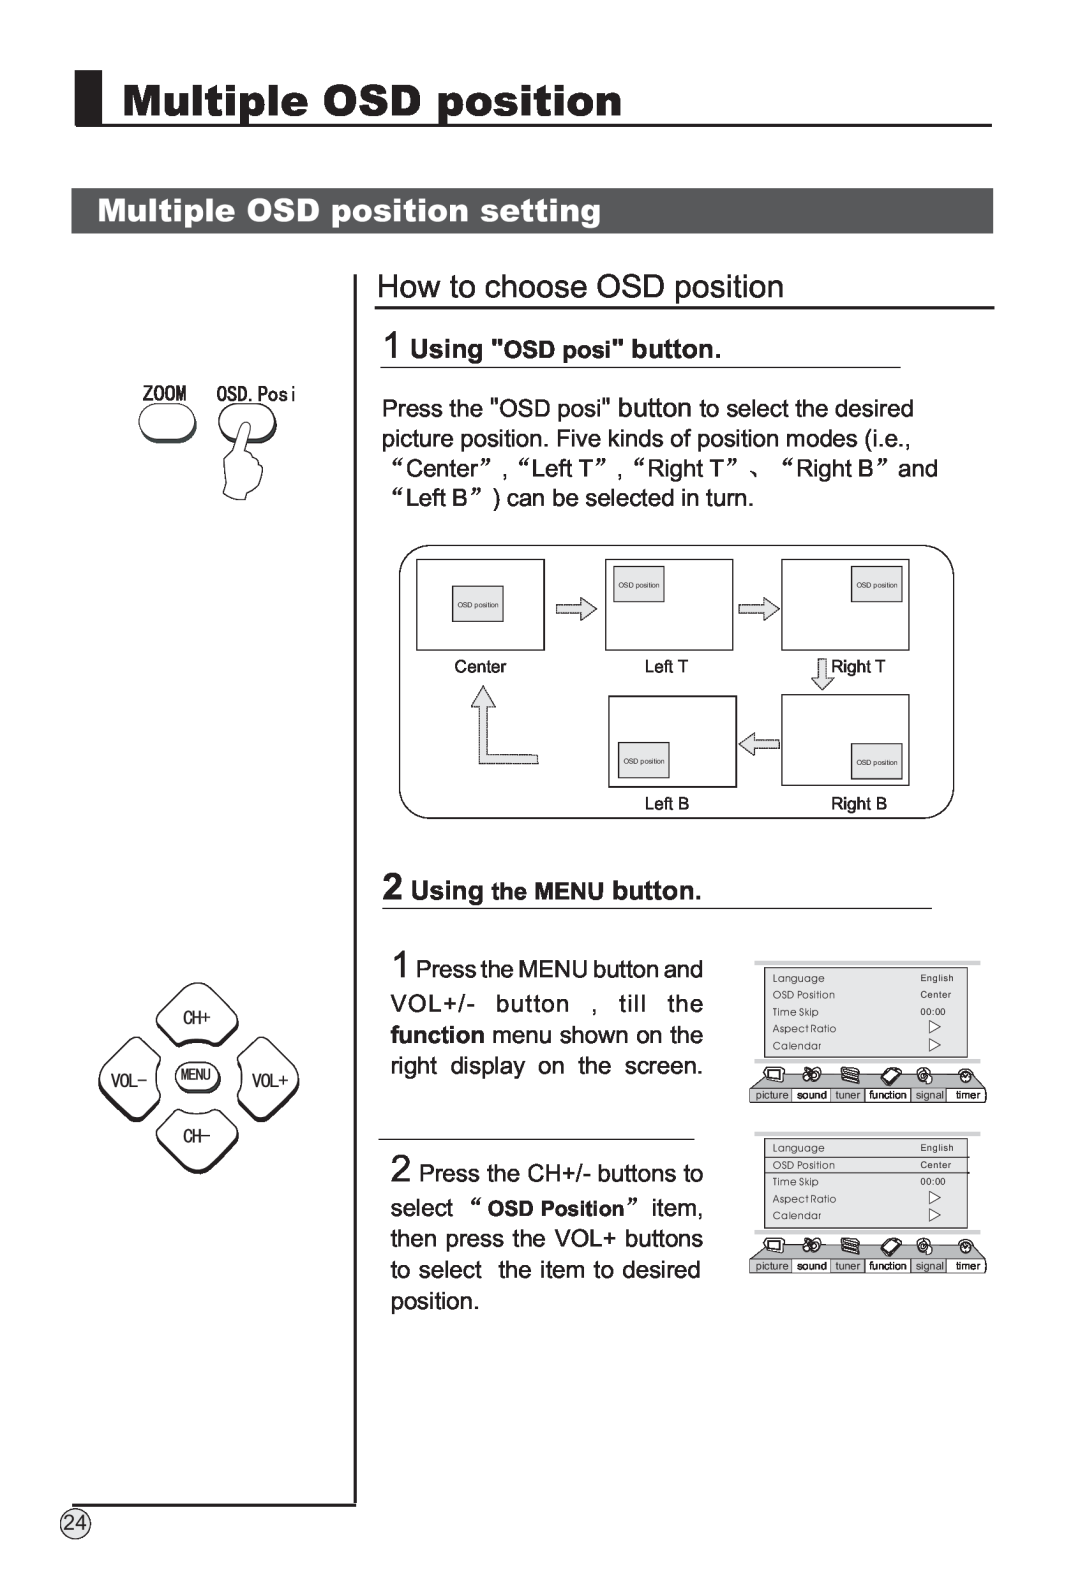 Haier P42SV6-C1 owner manual Multiple OSD position setting, How to choose OSD position, Using OSD posi button 